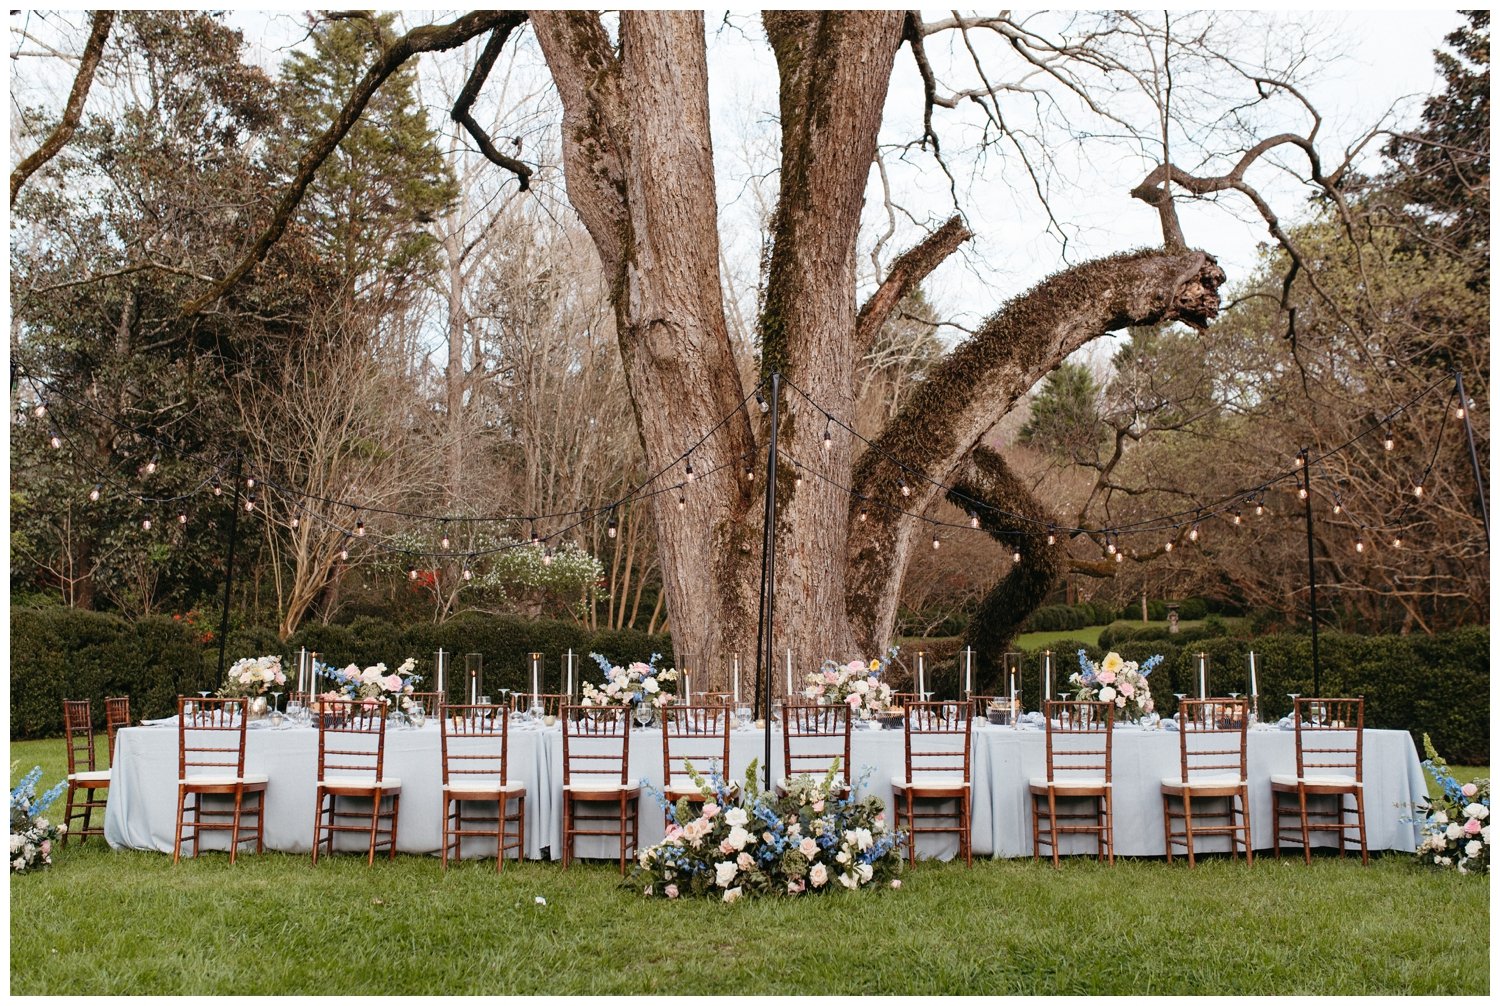 A table set for a wedding reception under a tree at an Atlanta intimate wedding venue